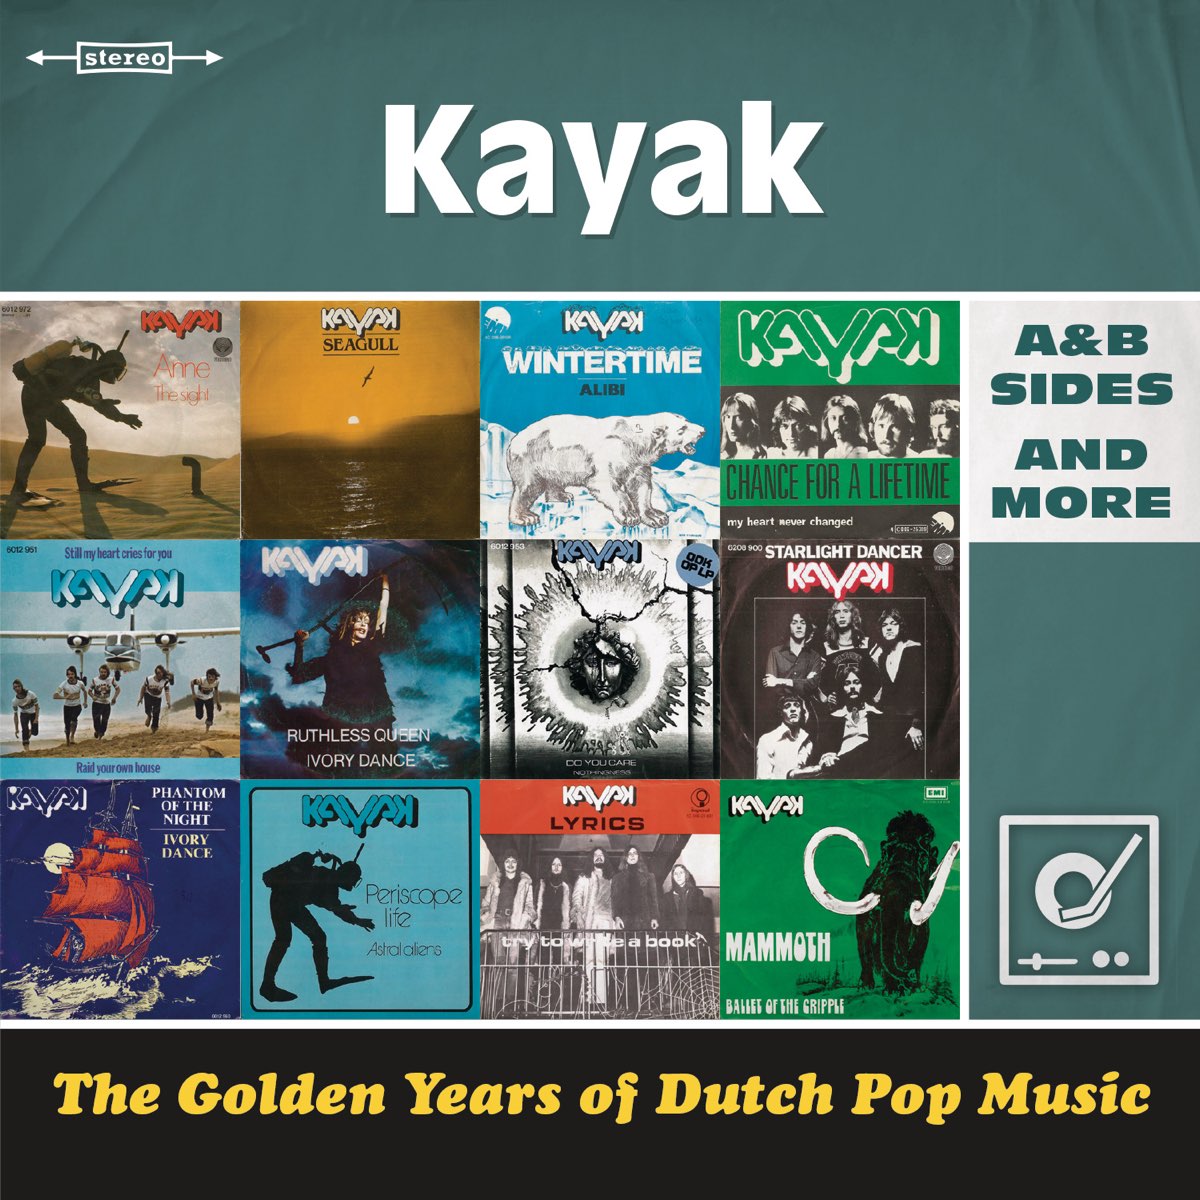 Golden Years of Dutch Pop Music - Album by Kayak - Apple Music